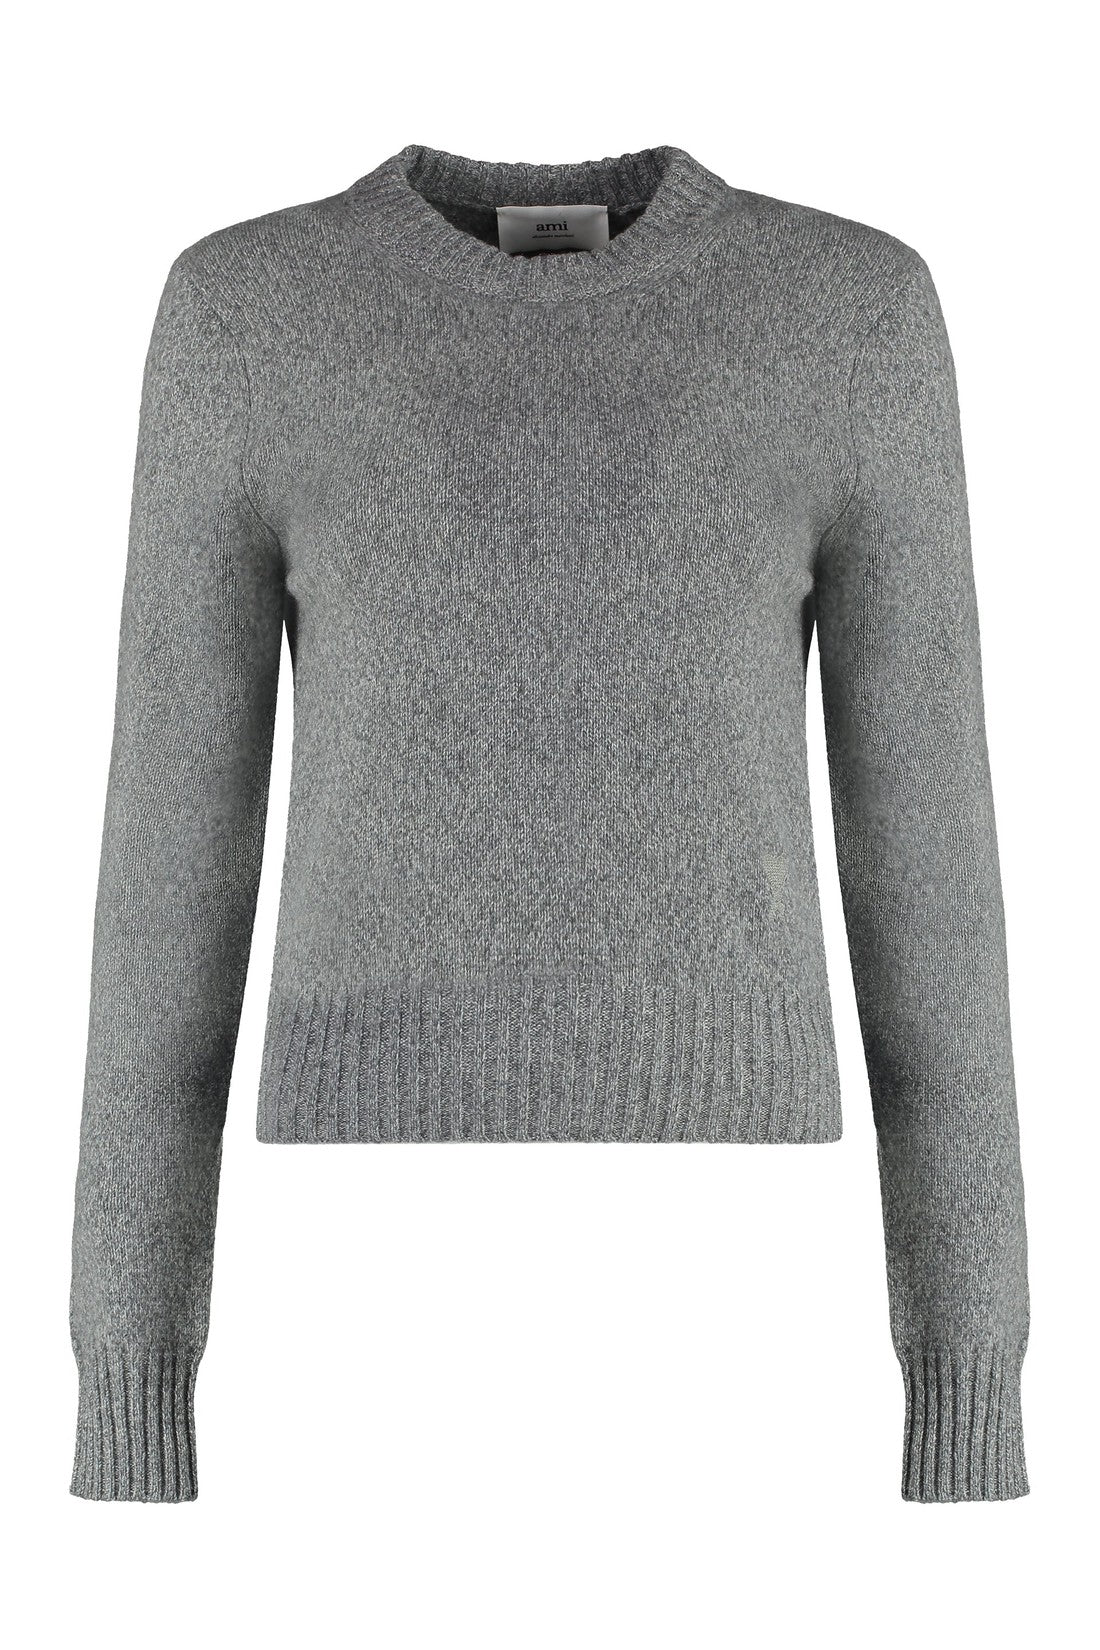 AMI PARIS-OUTLET-SALE-Wool and cashmere sweater-ARCHIVIST